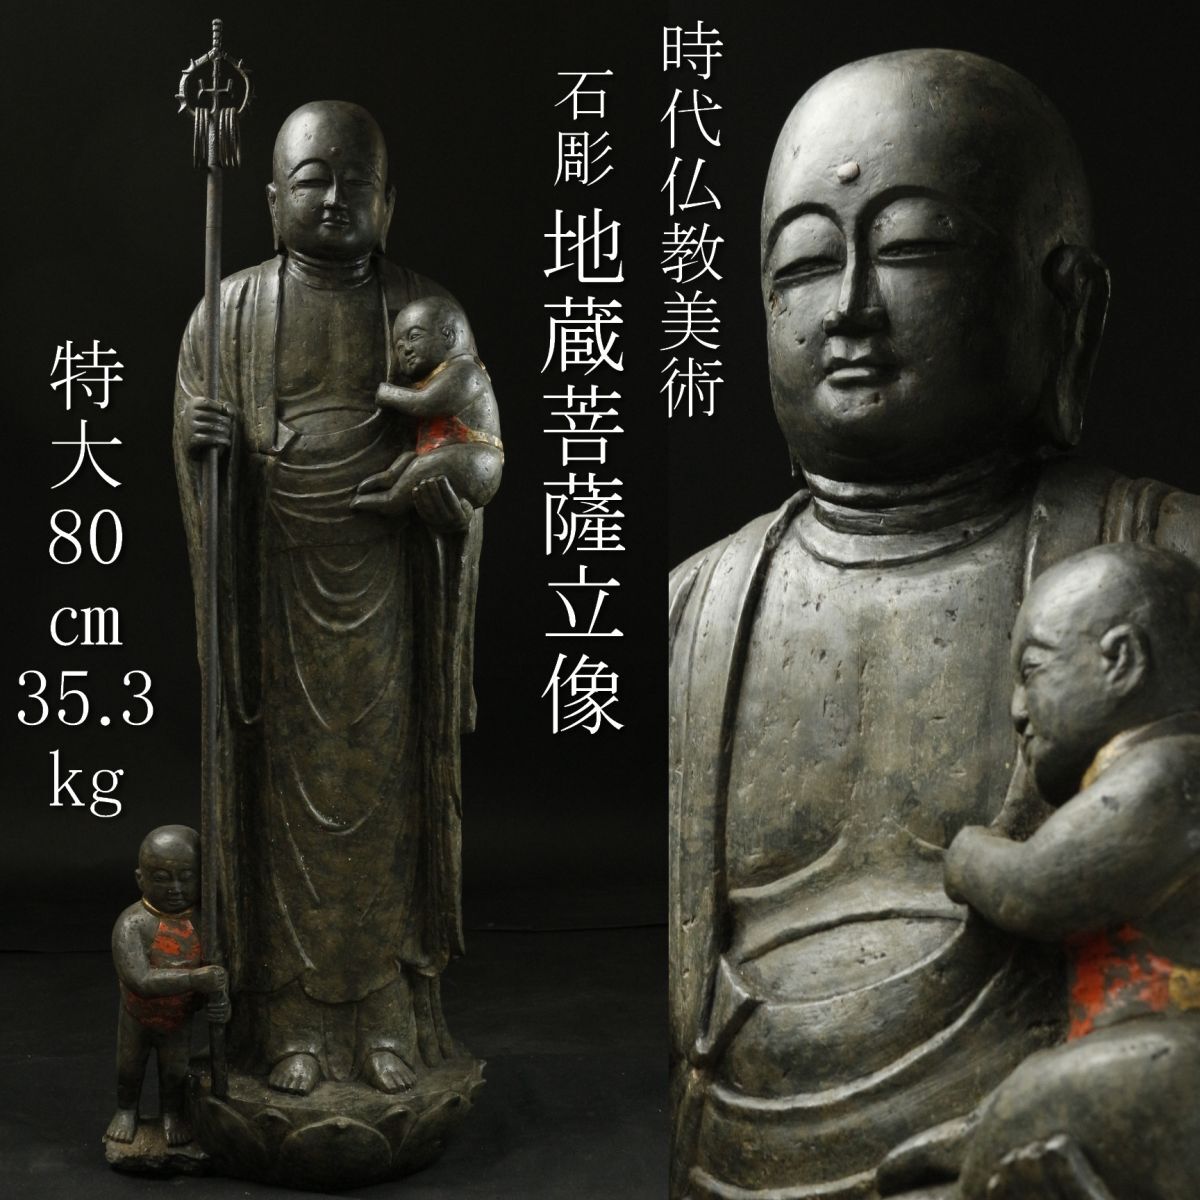 【LIG】時代仏教美術 石彫 地蔵菩薩立像 特大79.5㎝ 35.3kg 鉄製錫杖 石仏 寺院収蔵品 [.RW]23.12